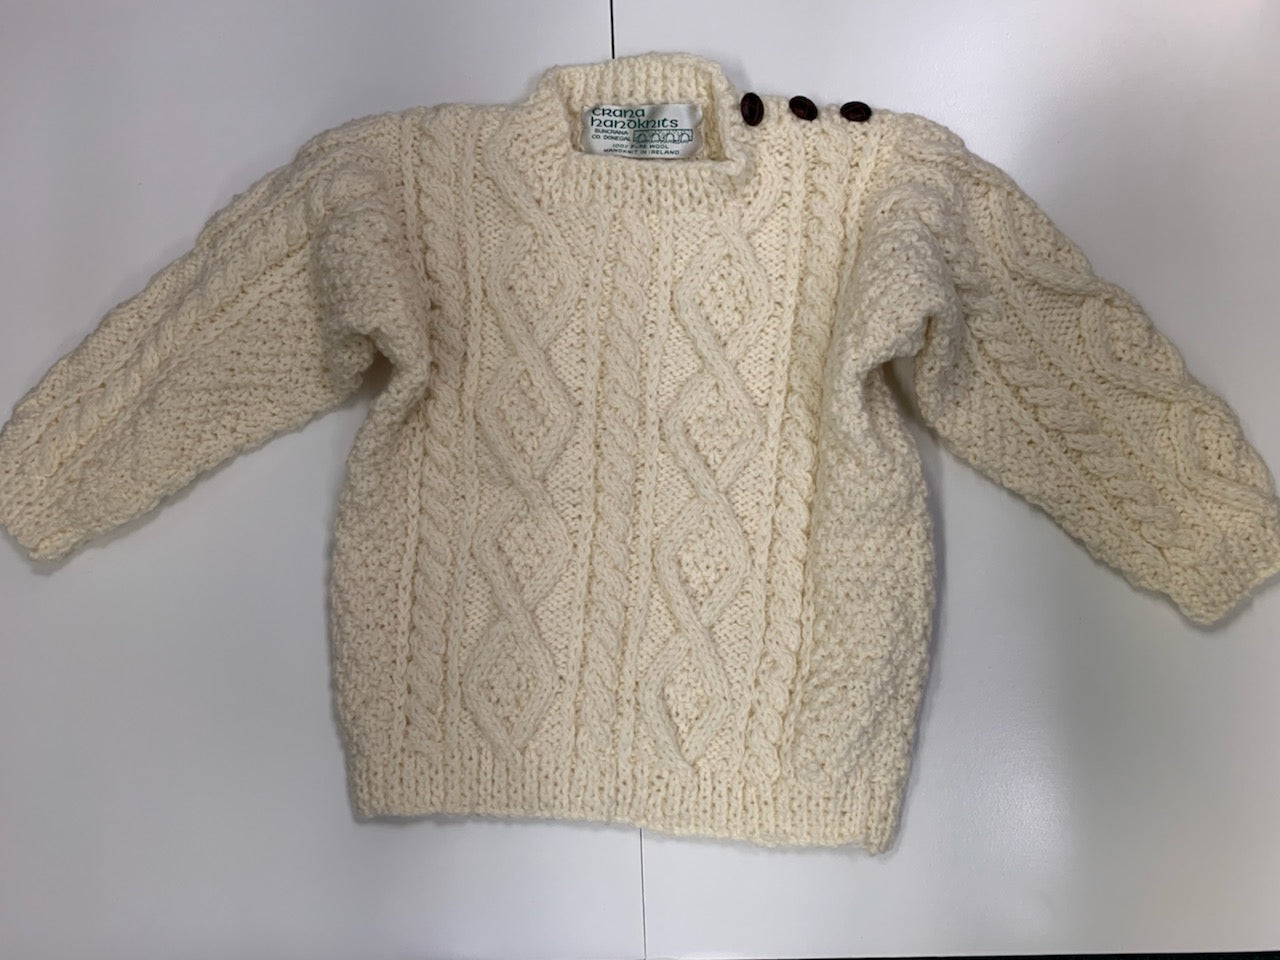 Crana Handknits Children's Sweater